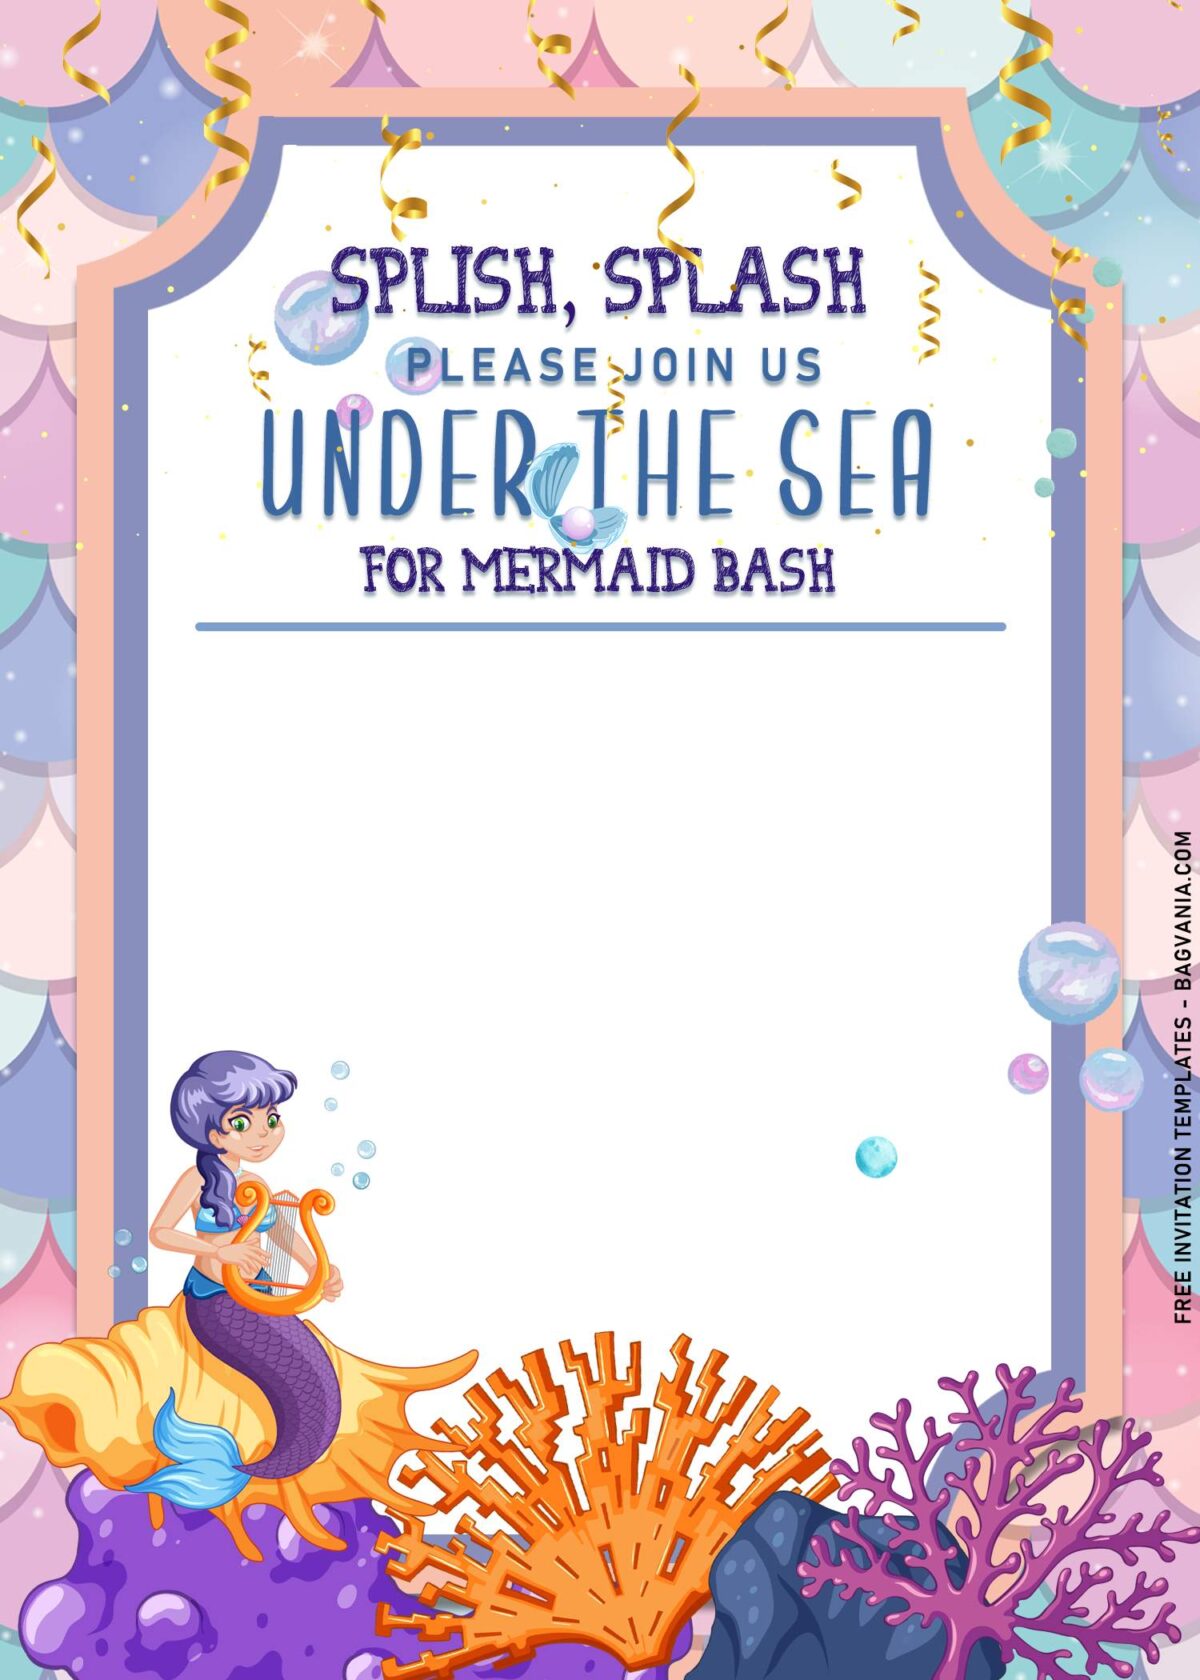 9+ Mermaid And Friends Birthday Invitation Templates with beautiful Mermaid skin background